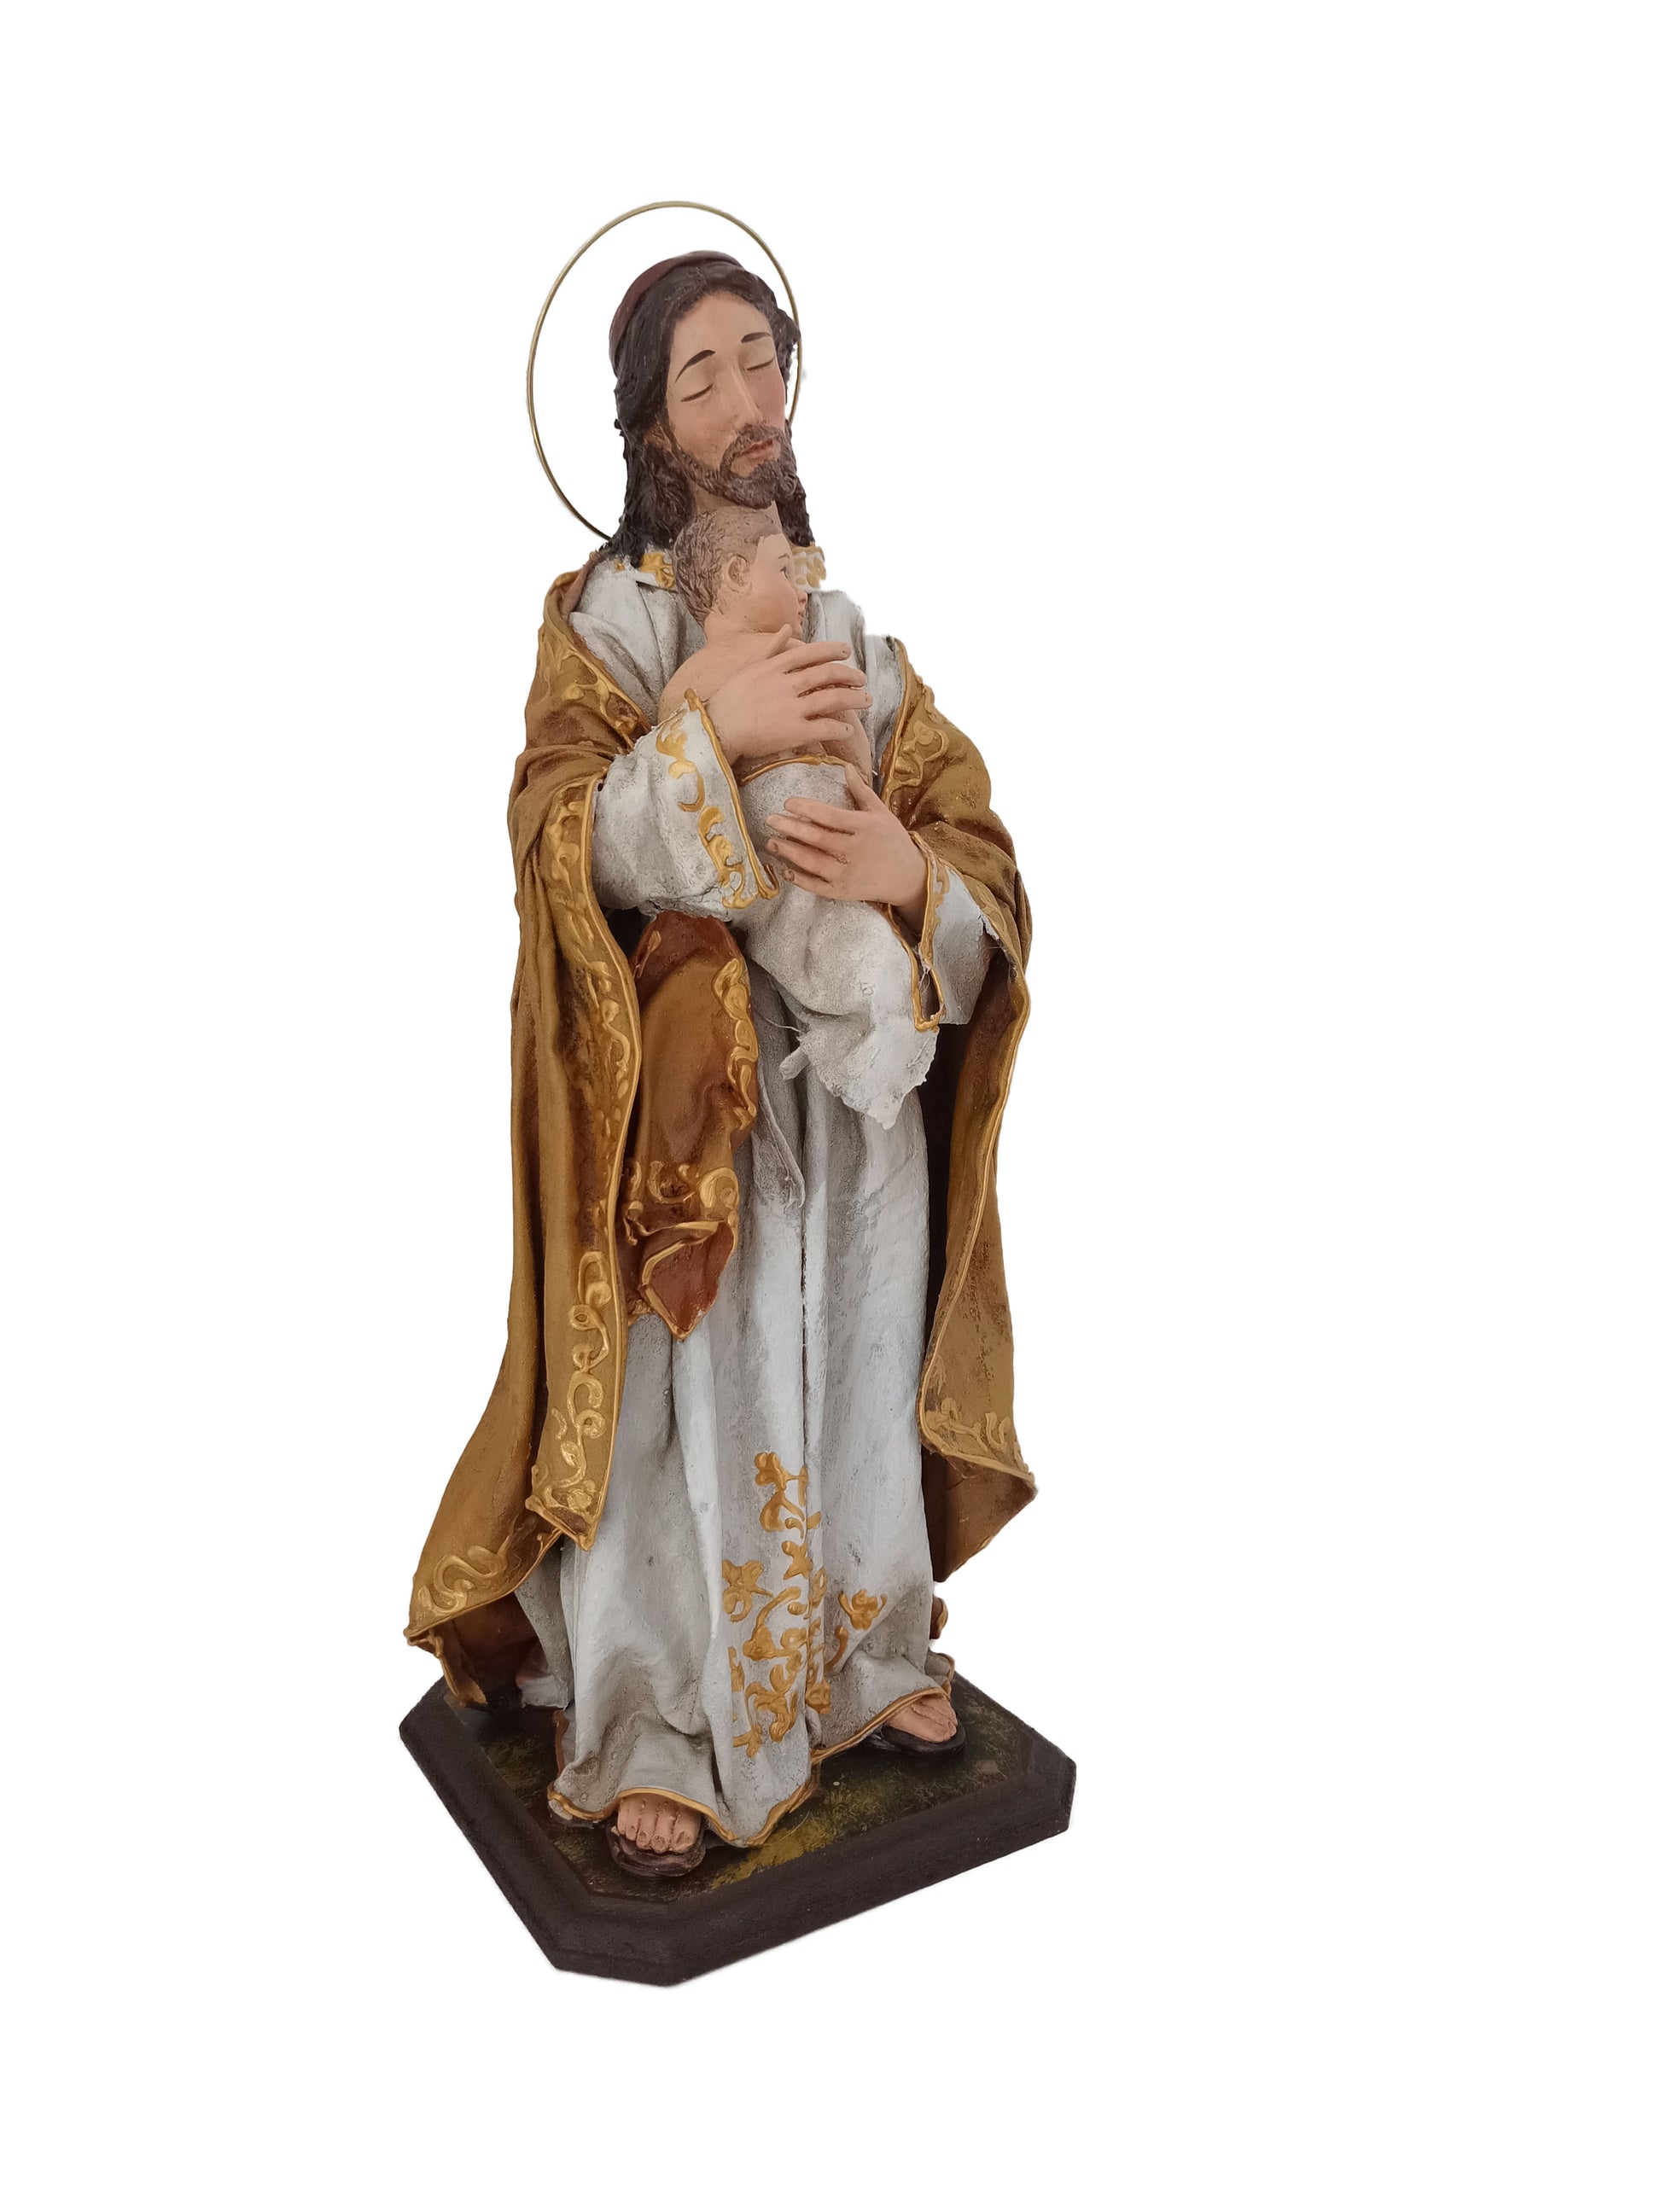 Saint Joseph - catholic saint - kmnk deco